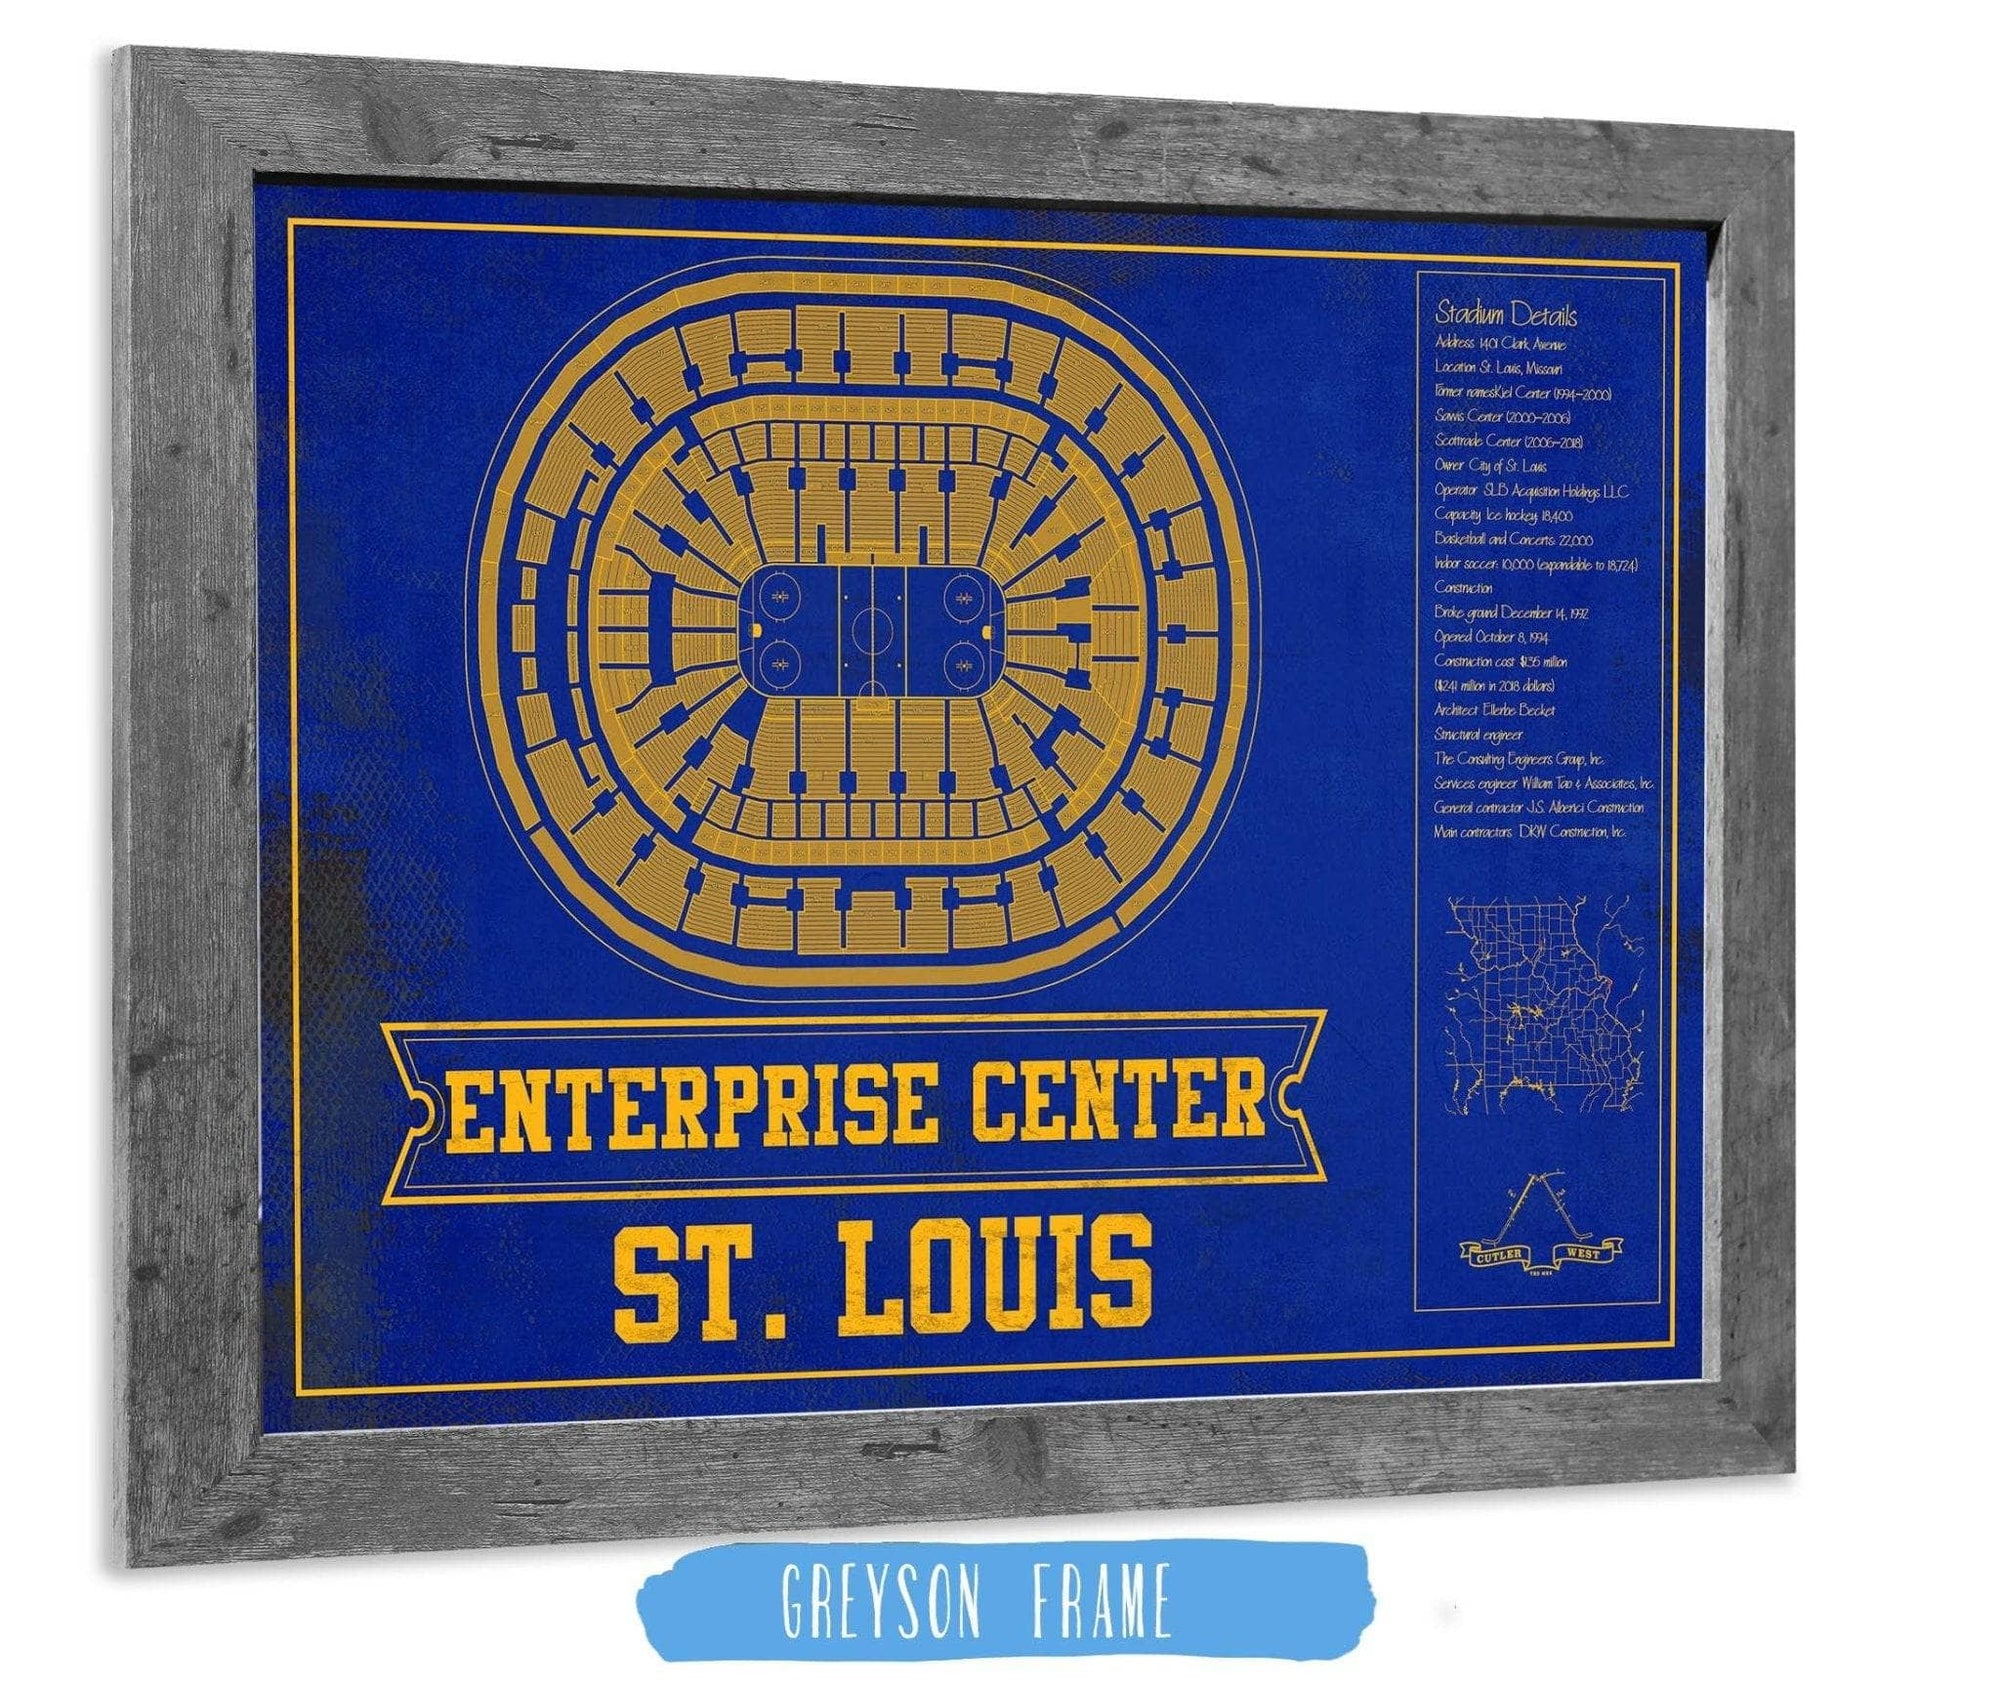 Cutler West 14" x 11" / Greyson Frame St. Louis Blues Team Colors - Enterprise Center Vintage Hockey Blueprint NHL Print 933350221_81189